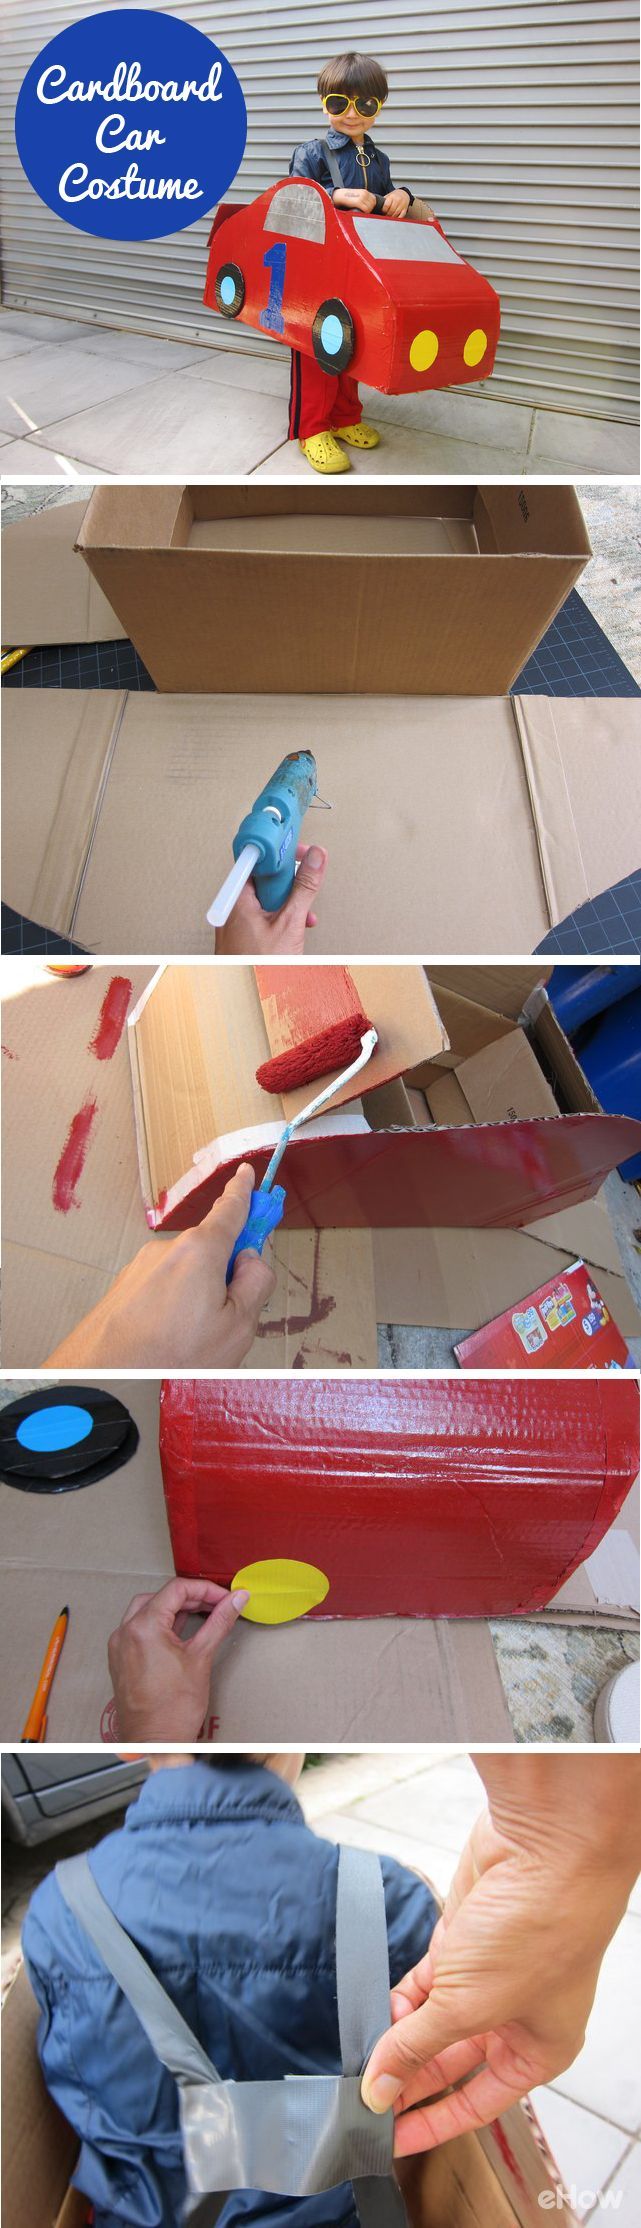 cardboard car costume instructions